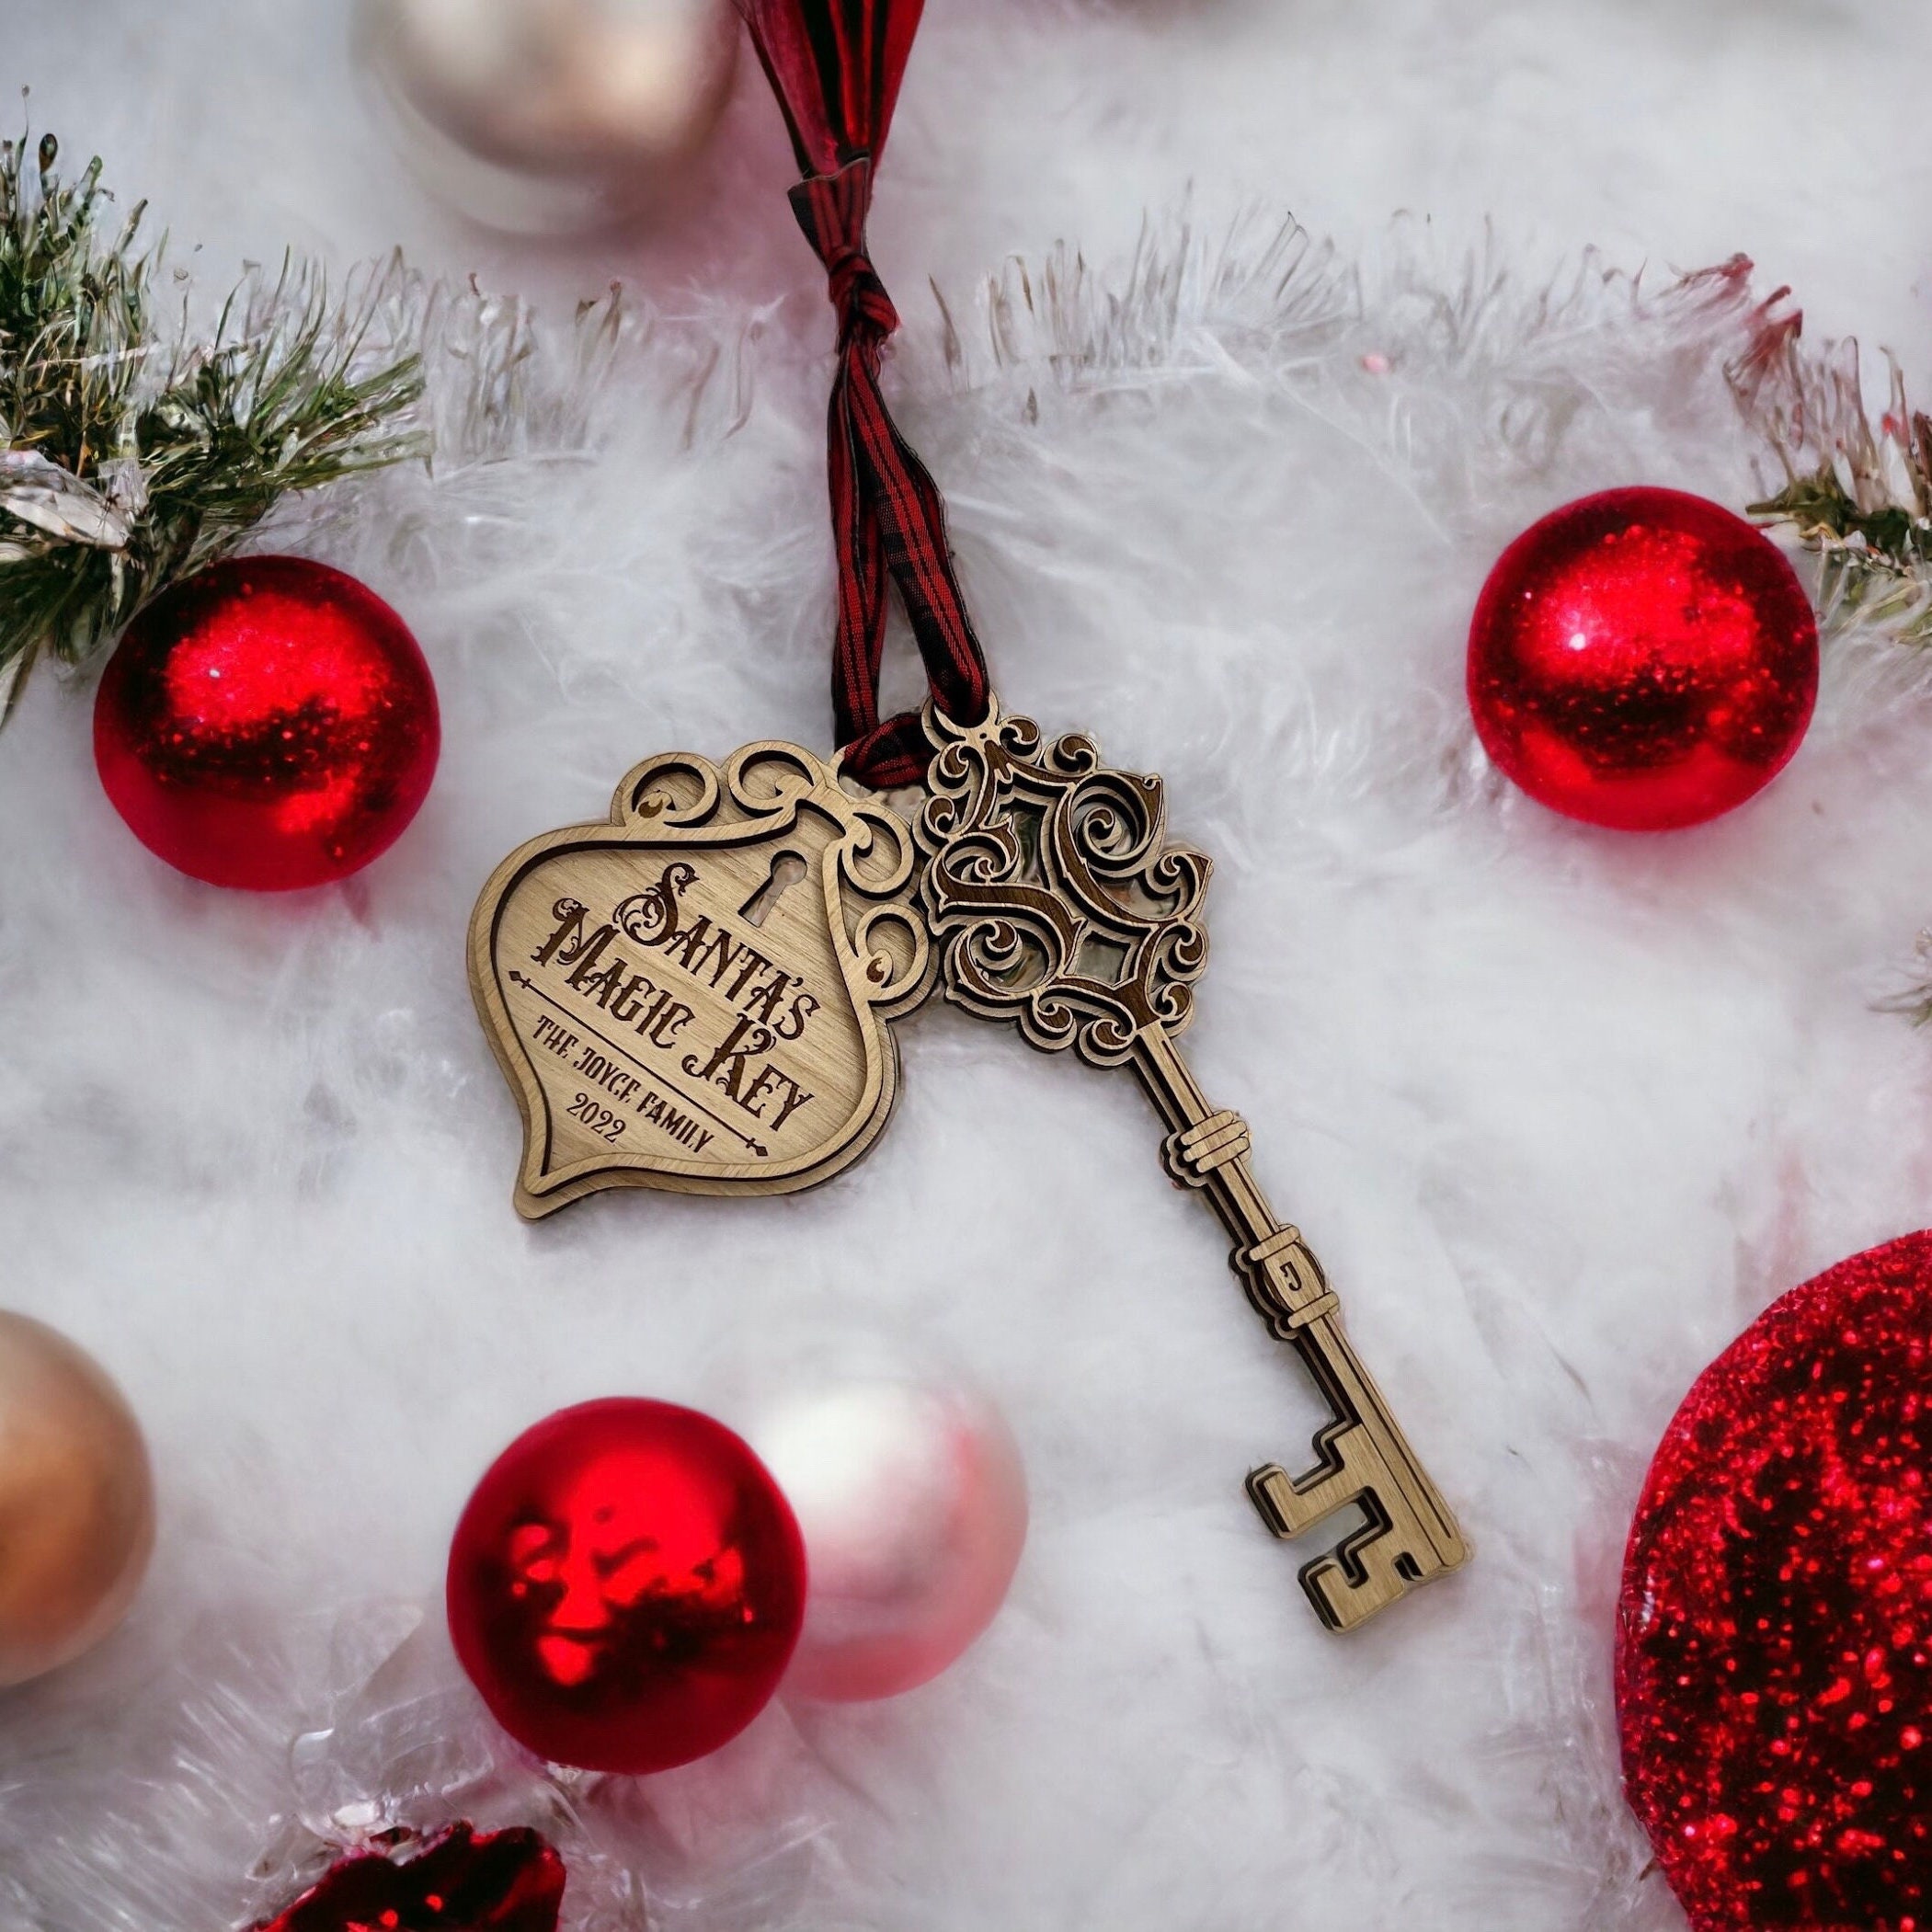 Personalised Magical Santa Key Christmas Decoration Tradition